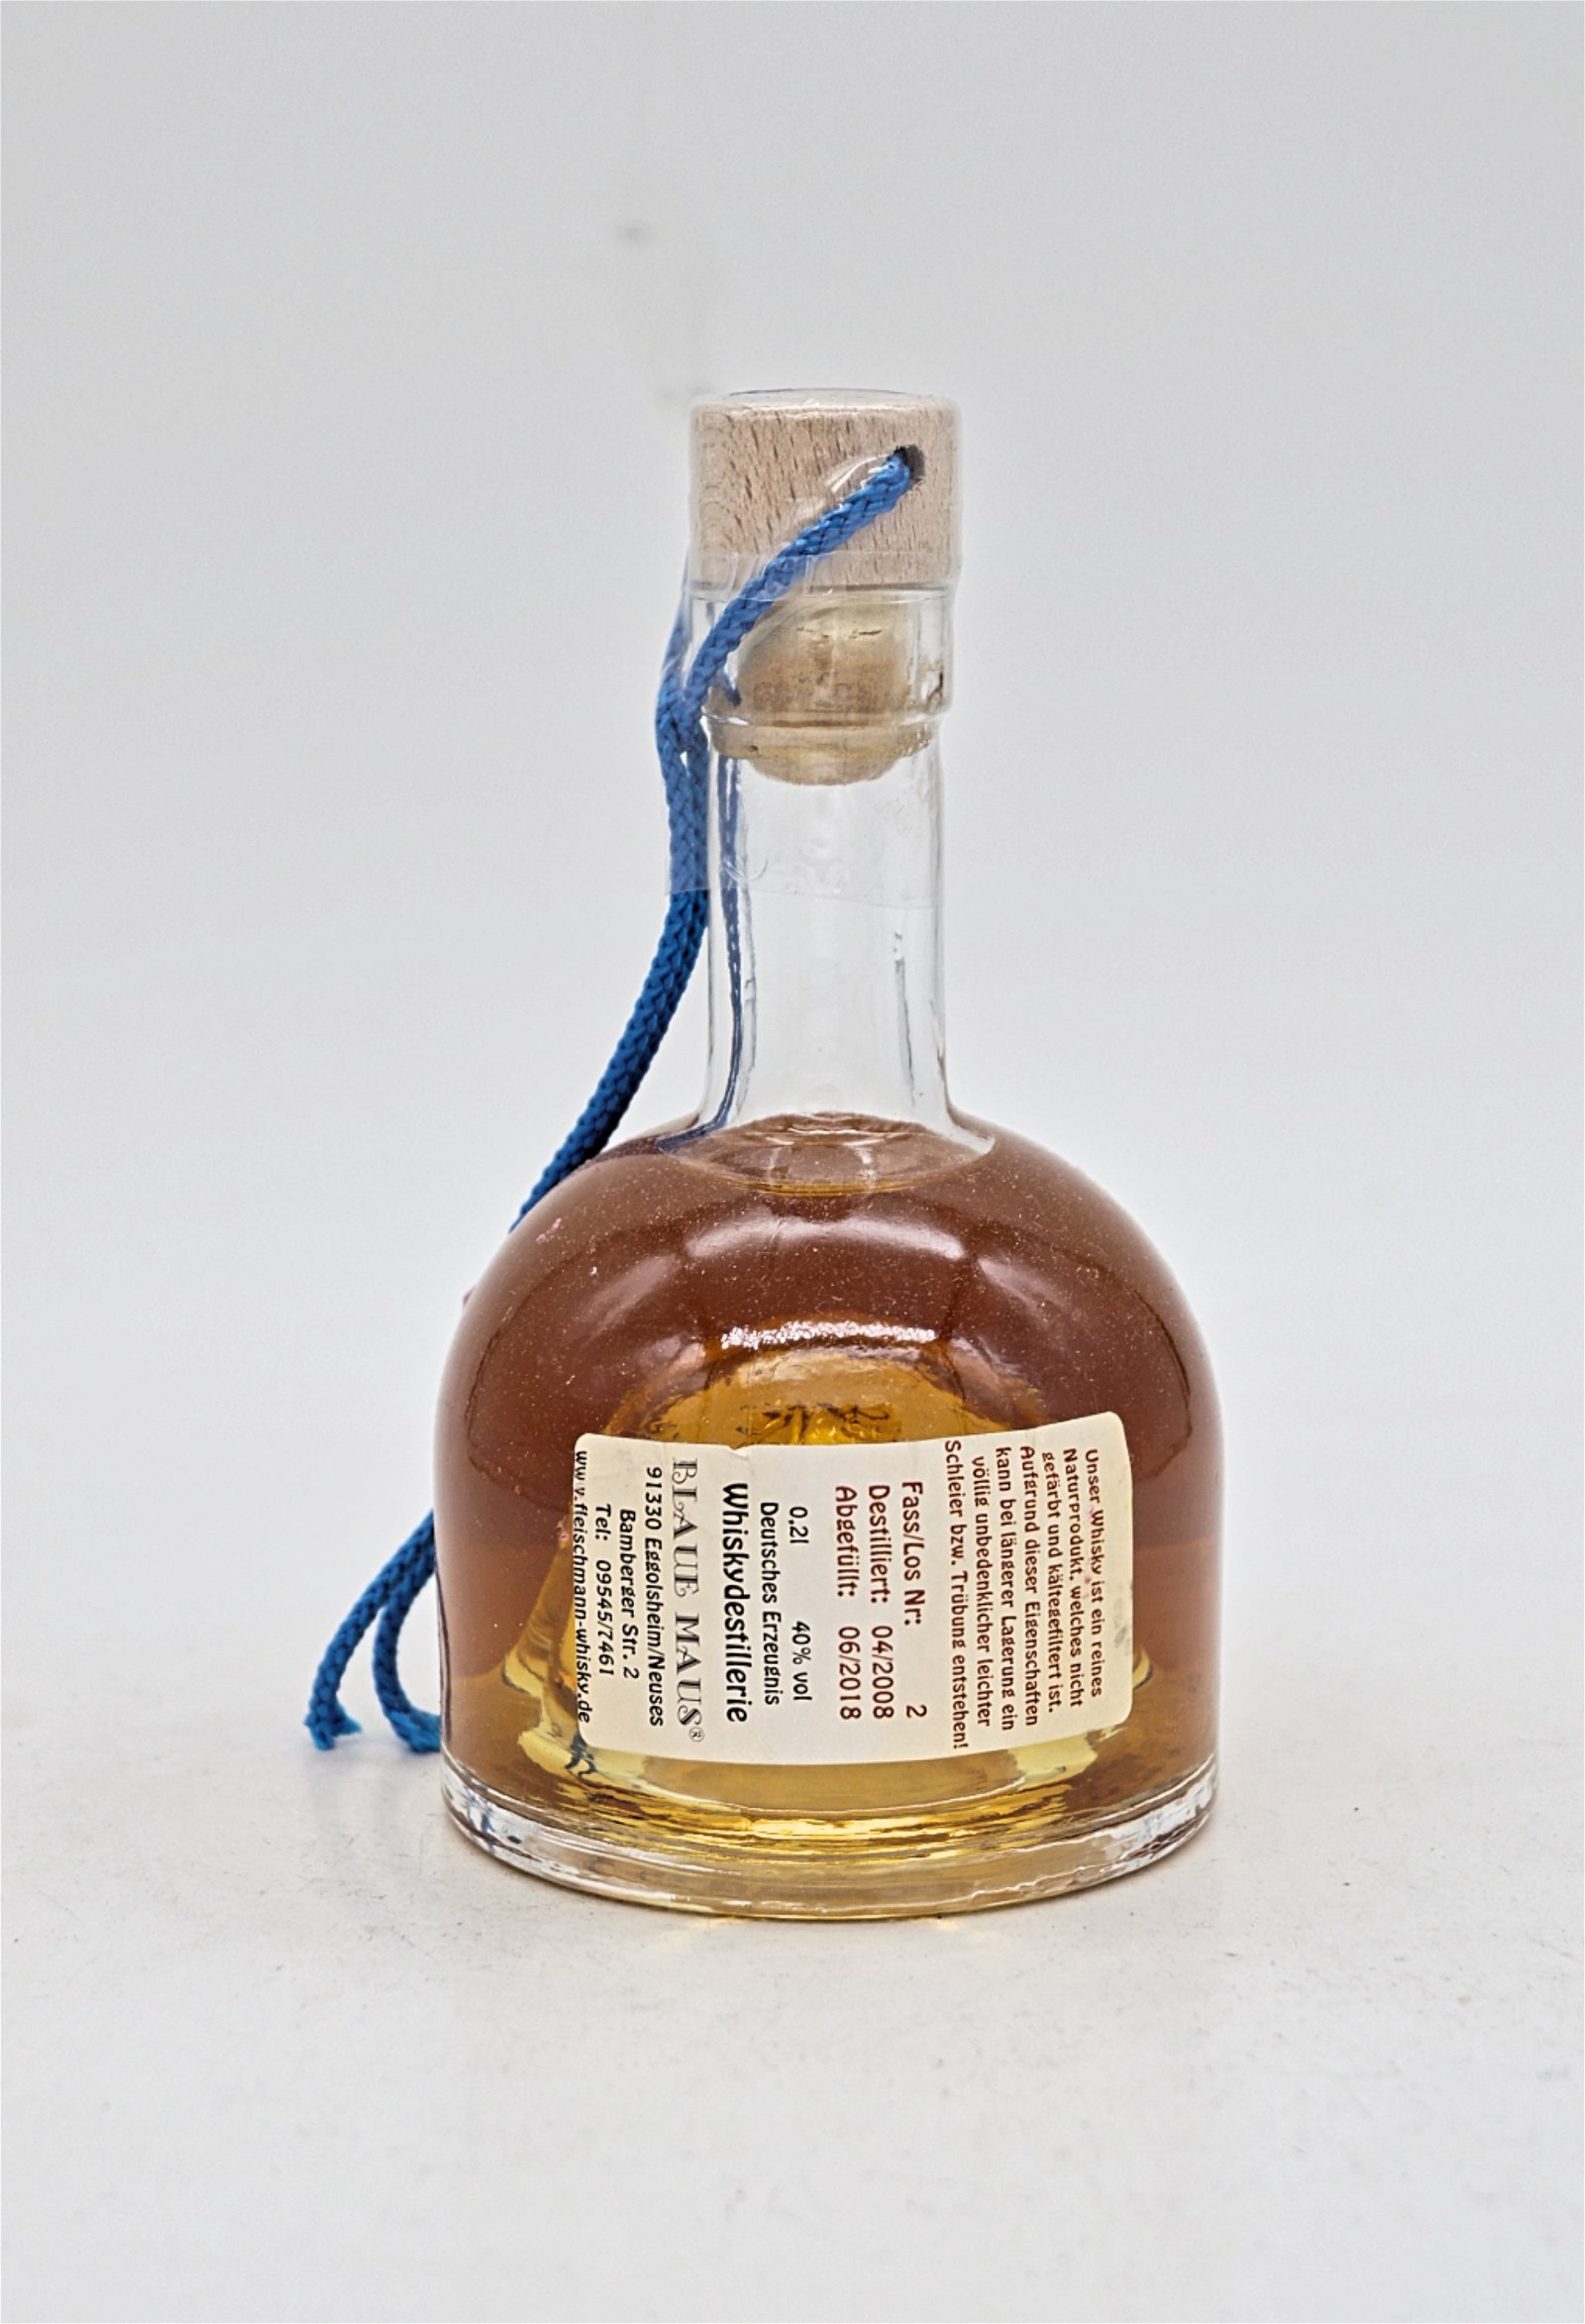 Blaue Maus Spinnaker Single Cask Malt Whisky 2008/2018